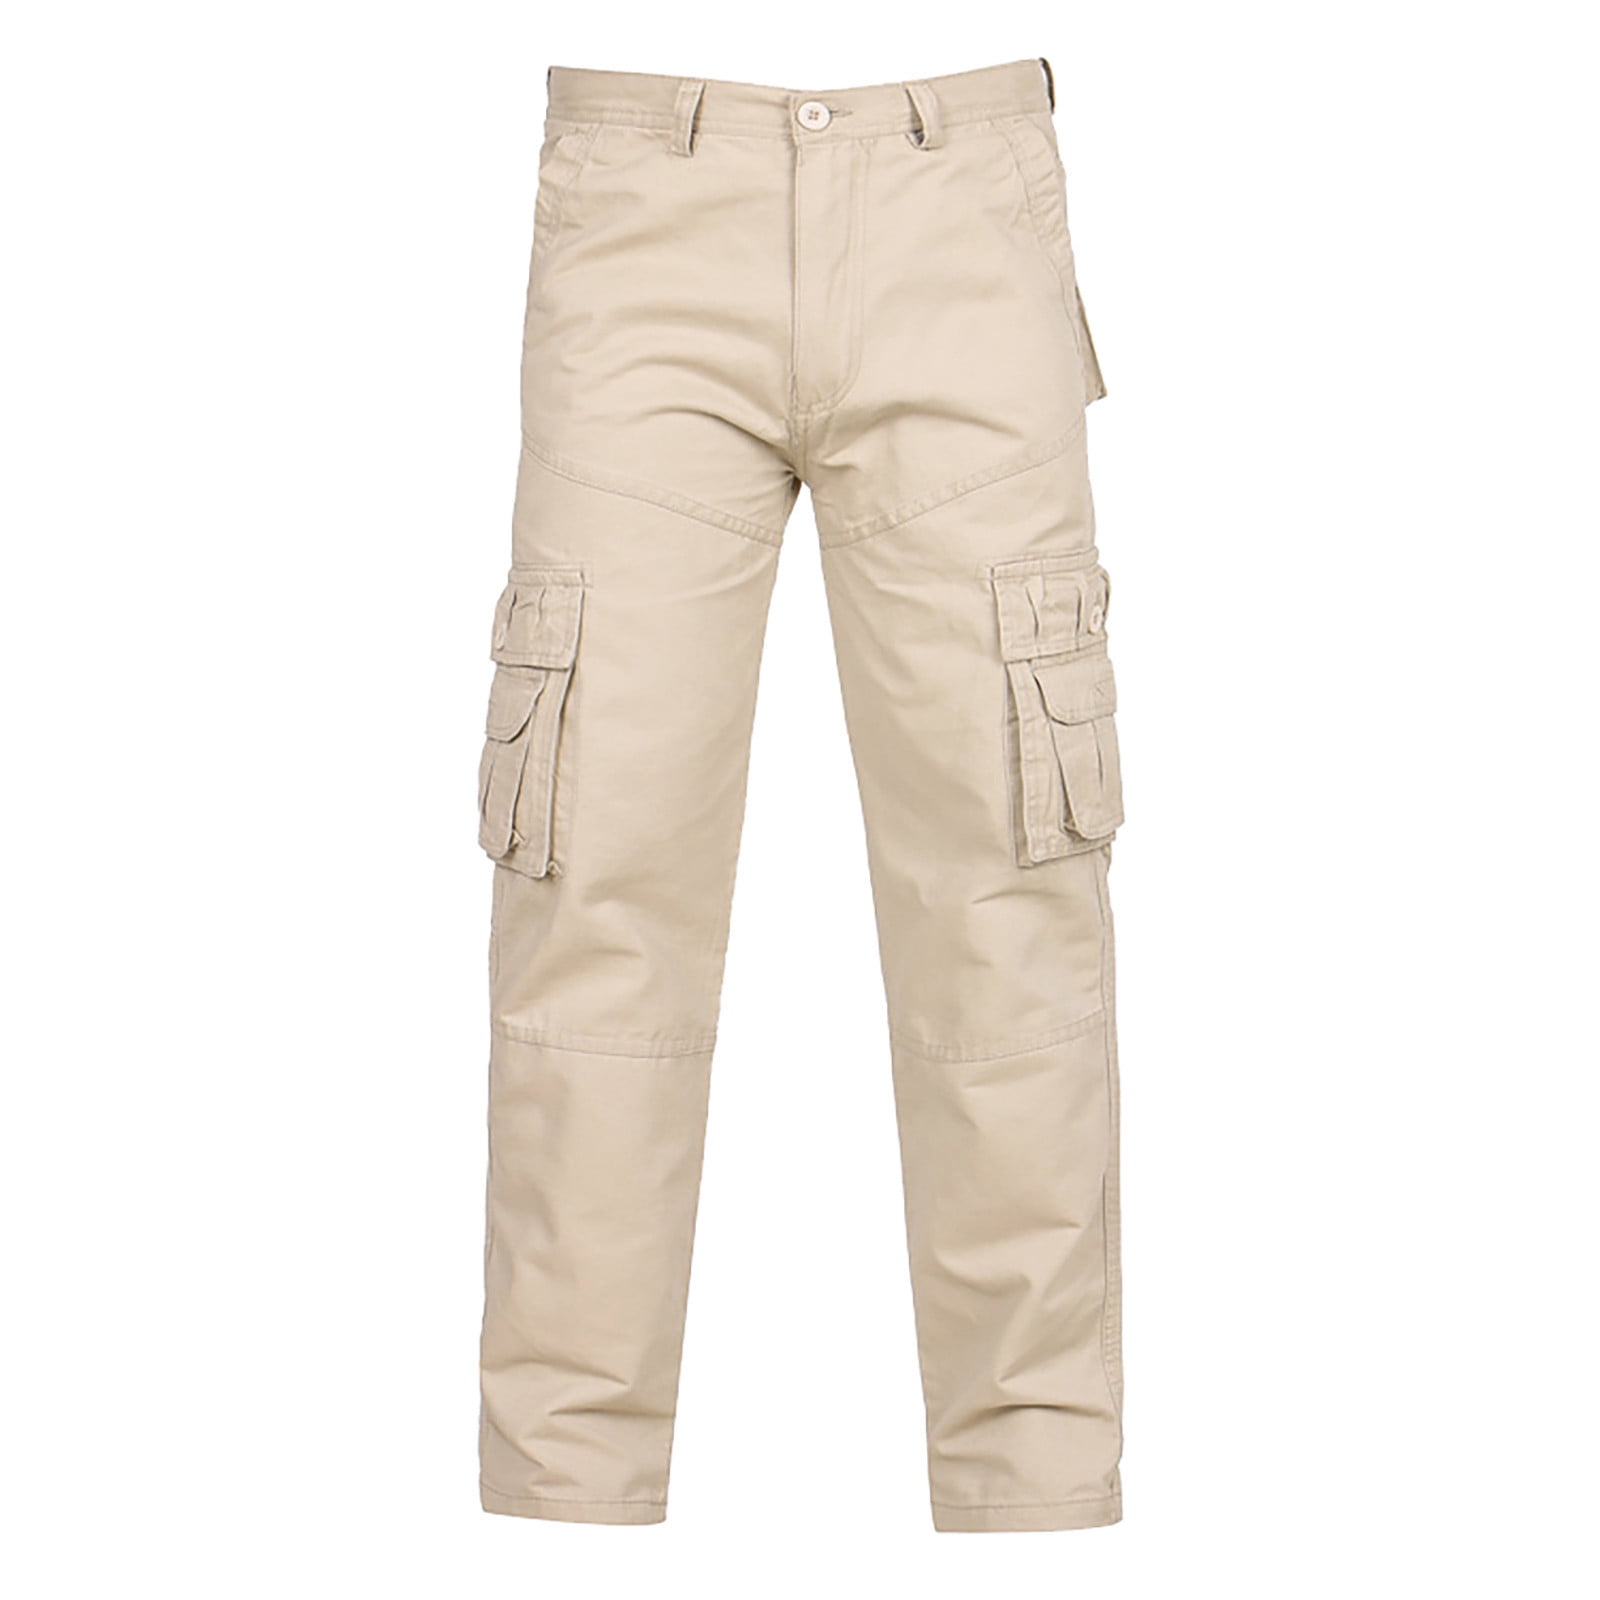 8QIDA Fashion Men's Casual Outdoors Button Multi Pocket Work Trouser ...